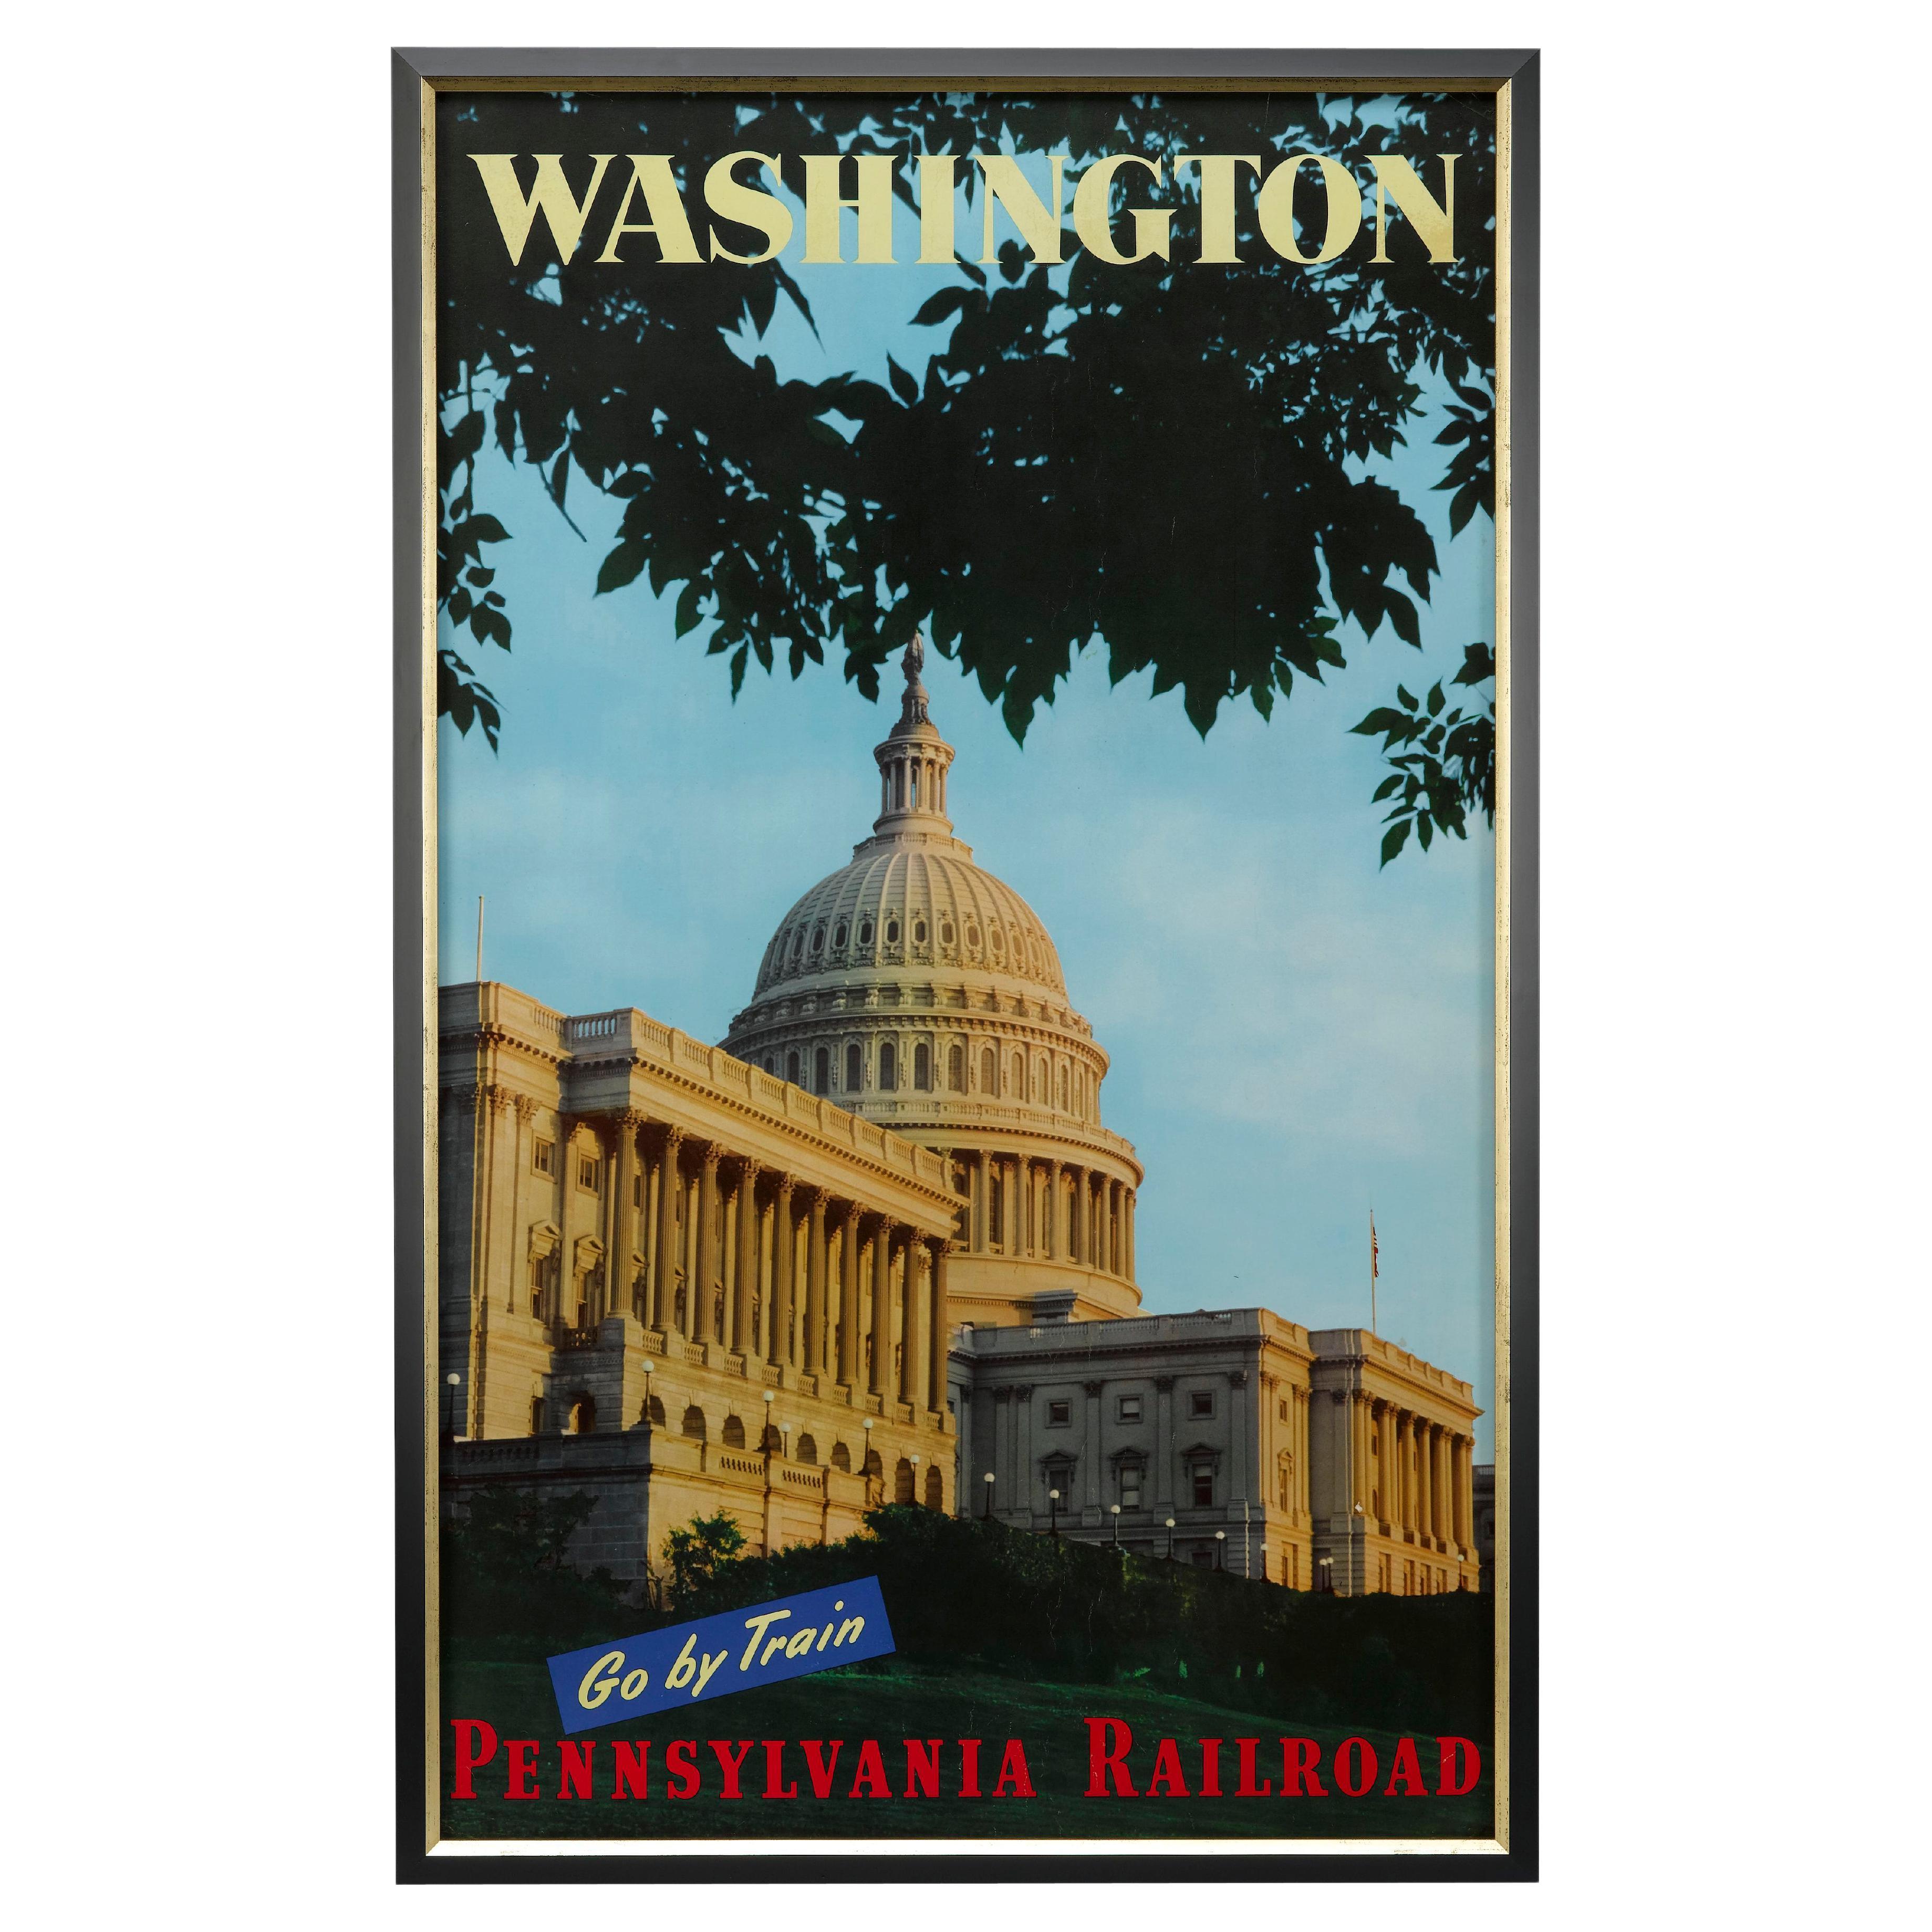 Affiche de voyage vintage « Washington/Go By Train/ Pennsylvania Railroad » (Washington/Go par train) en vente